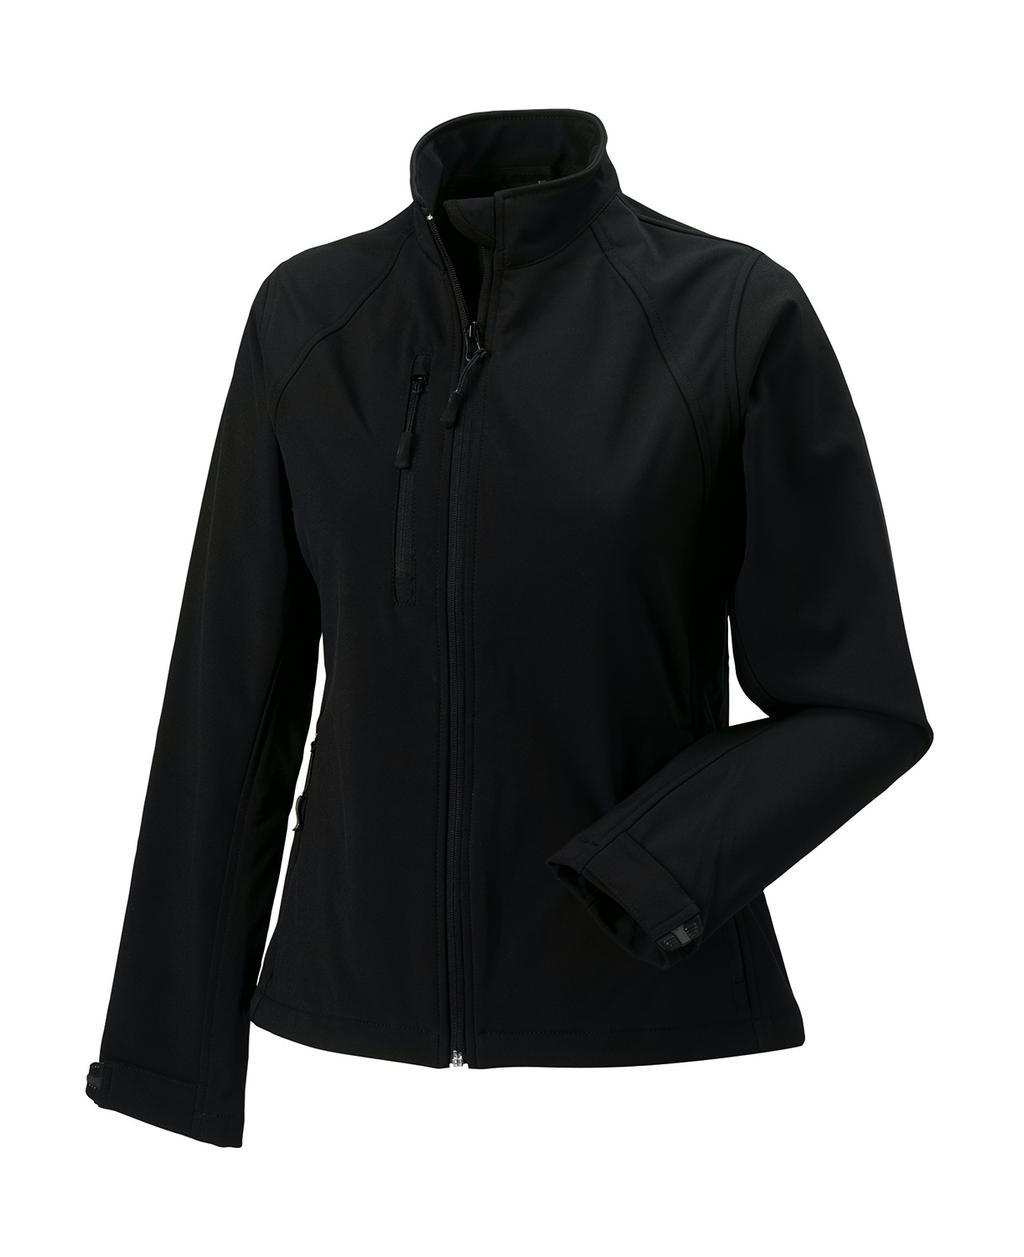  Ladies Softshell Jacket  in Farbe Black